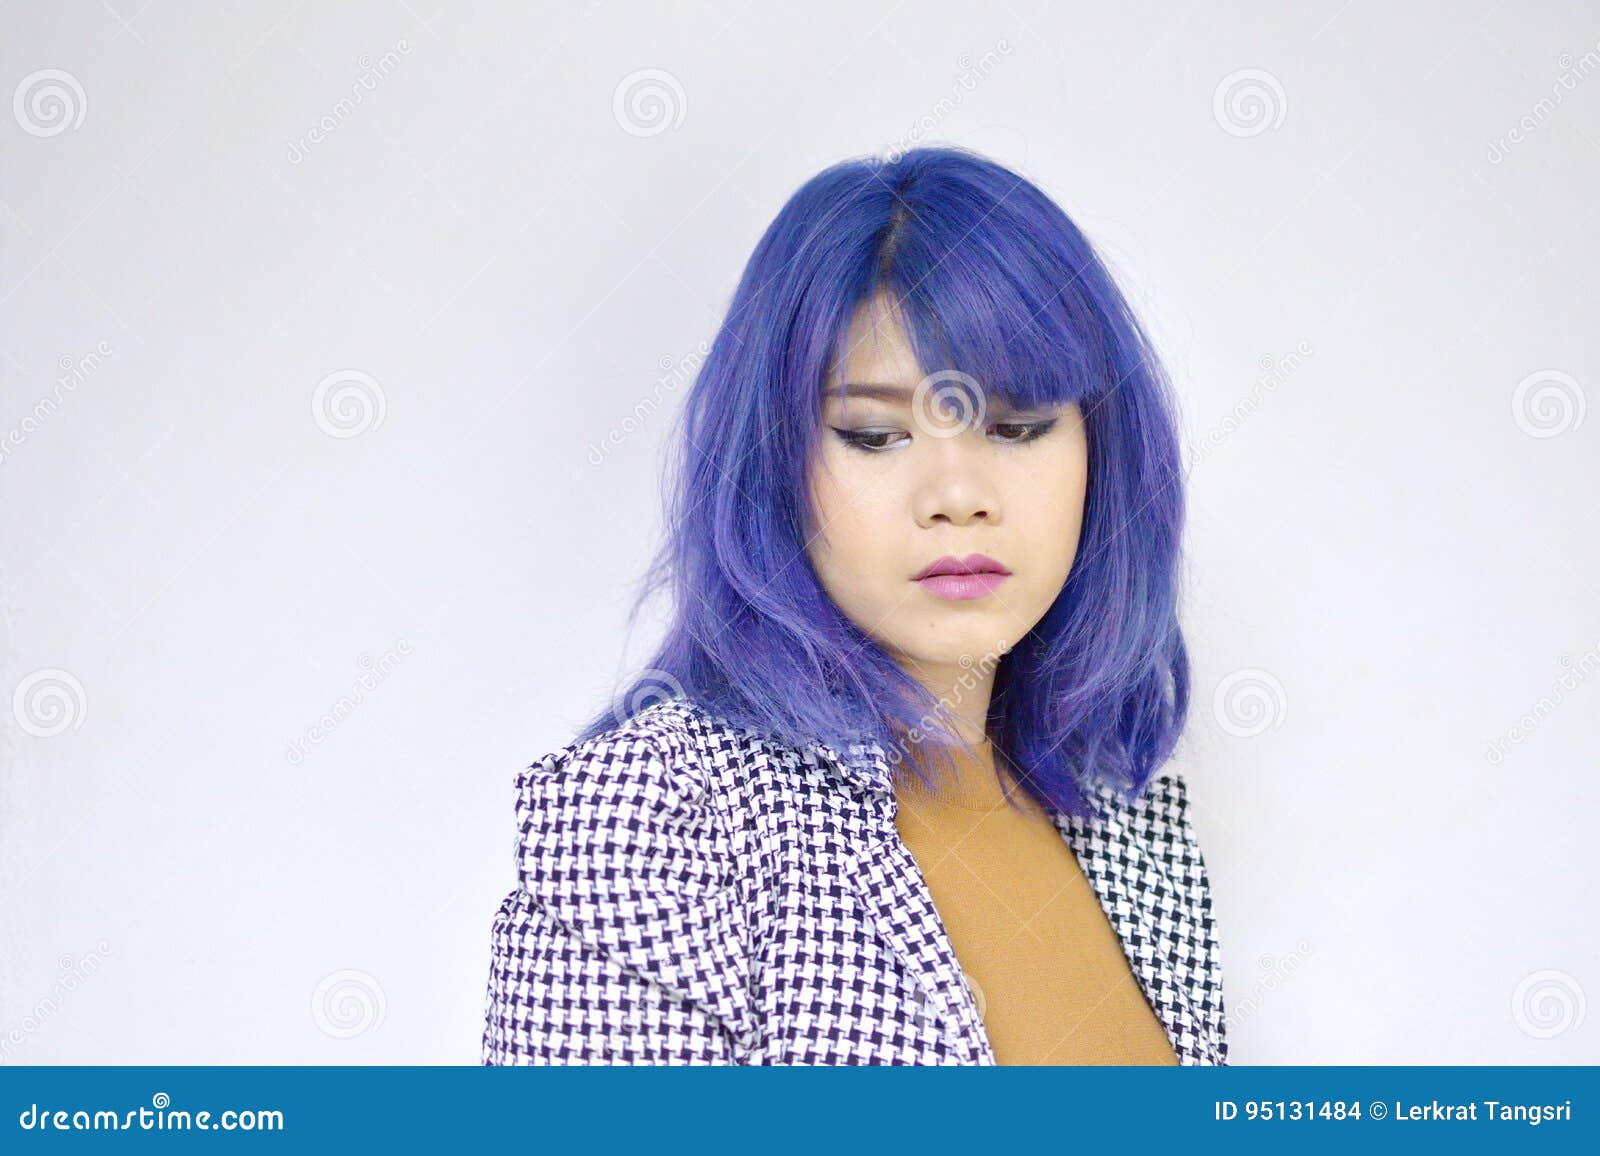 4. Pinterest Balayage Blue Hair for Asian Women - wide 3